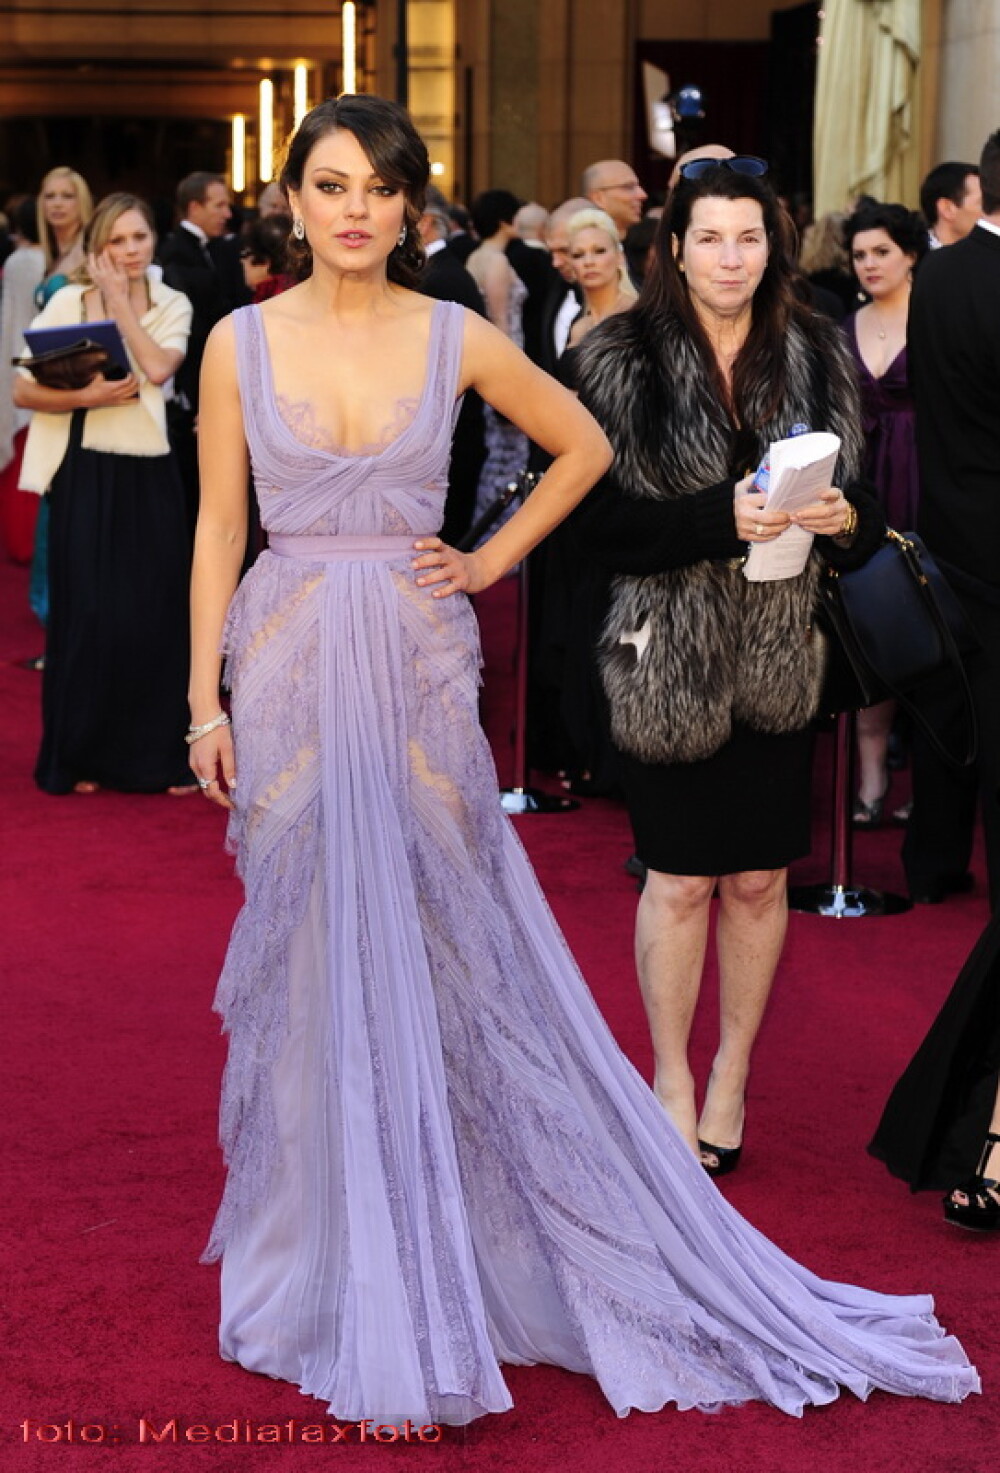 Cele mai frumoase rochii. Rosul si culorile pale, “vedete” la Oscar. FOTO - Imaginea 4